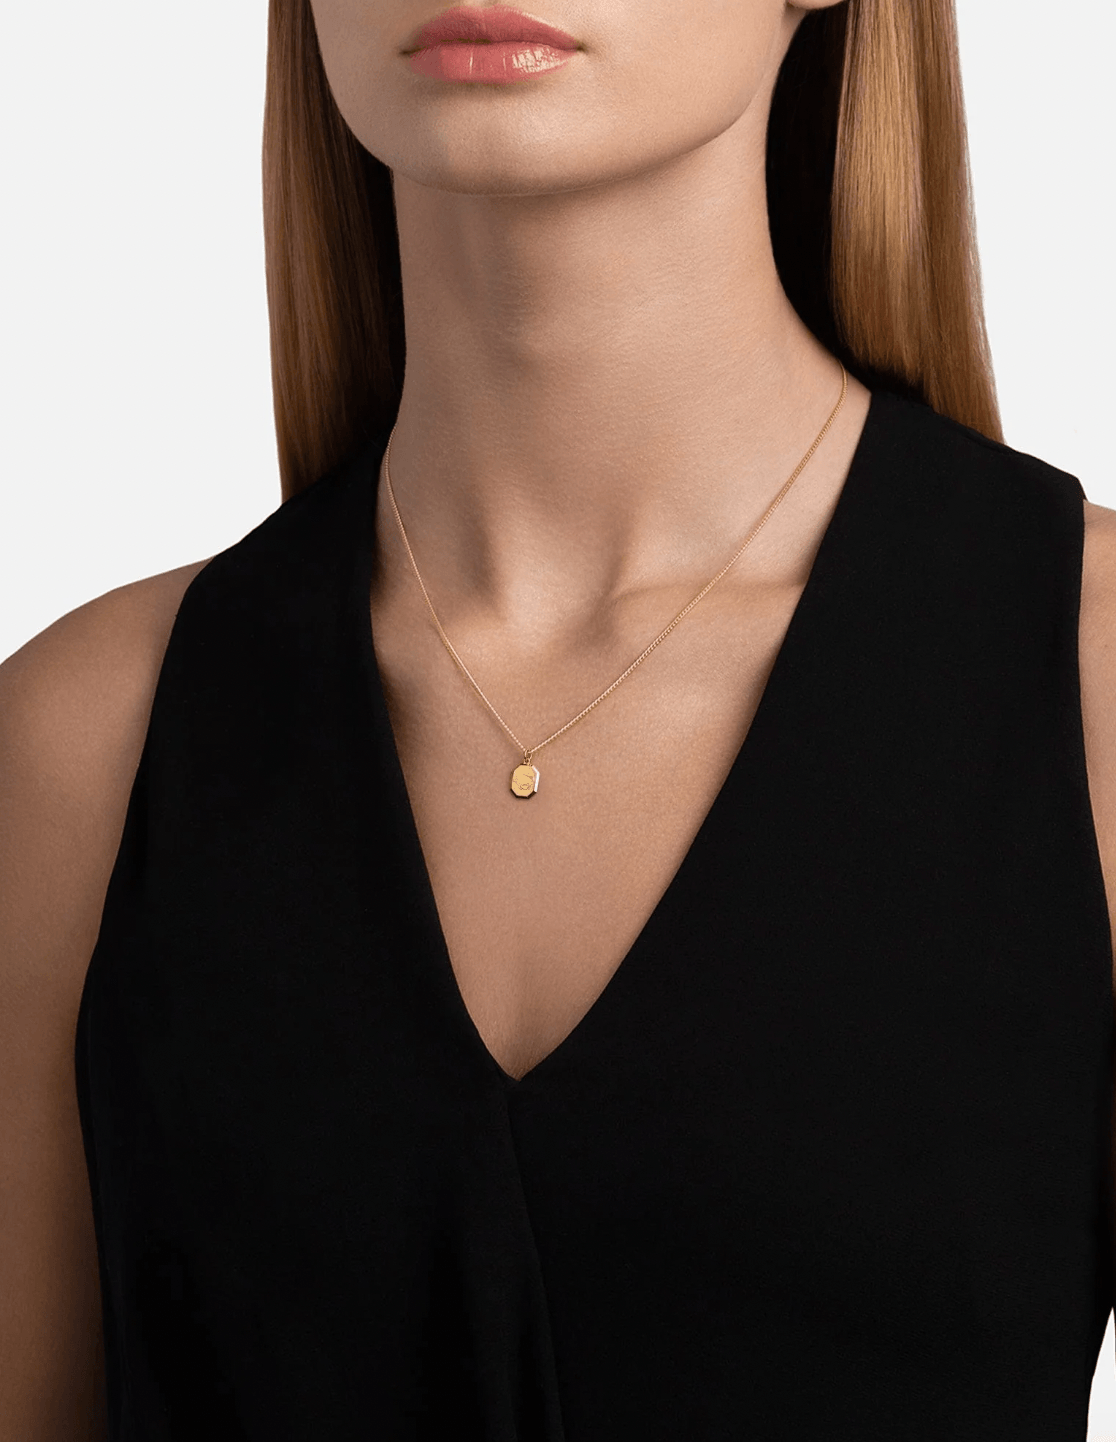 Taurus Nyle Pendant Necklace by Miansai - Haven